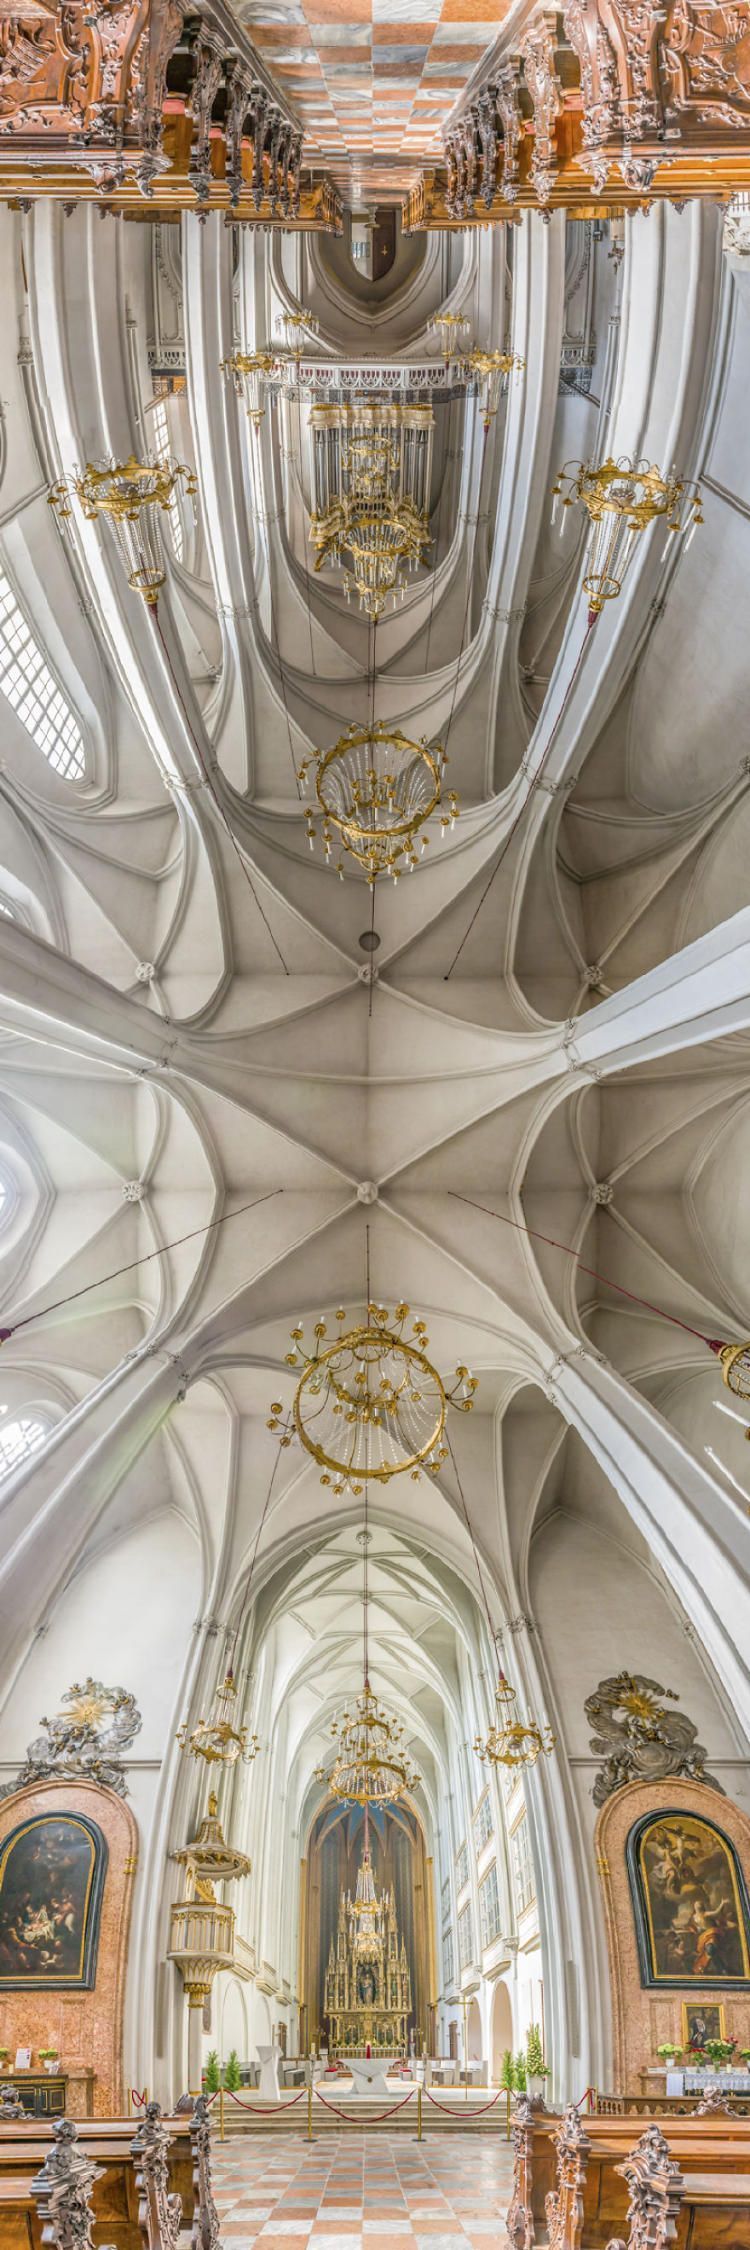 Церковь Святого Августина, Вена, Австрия